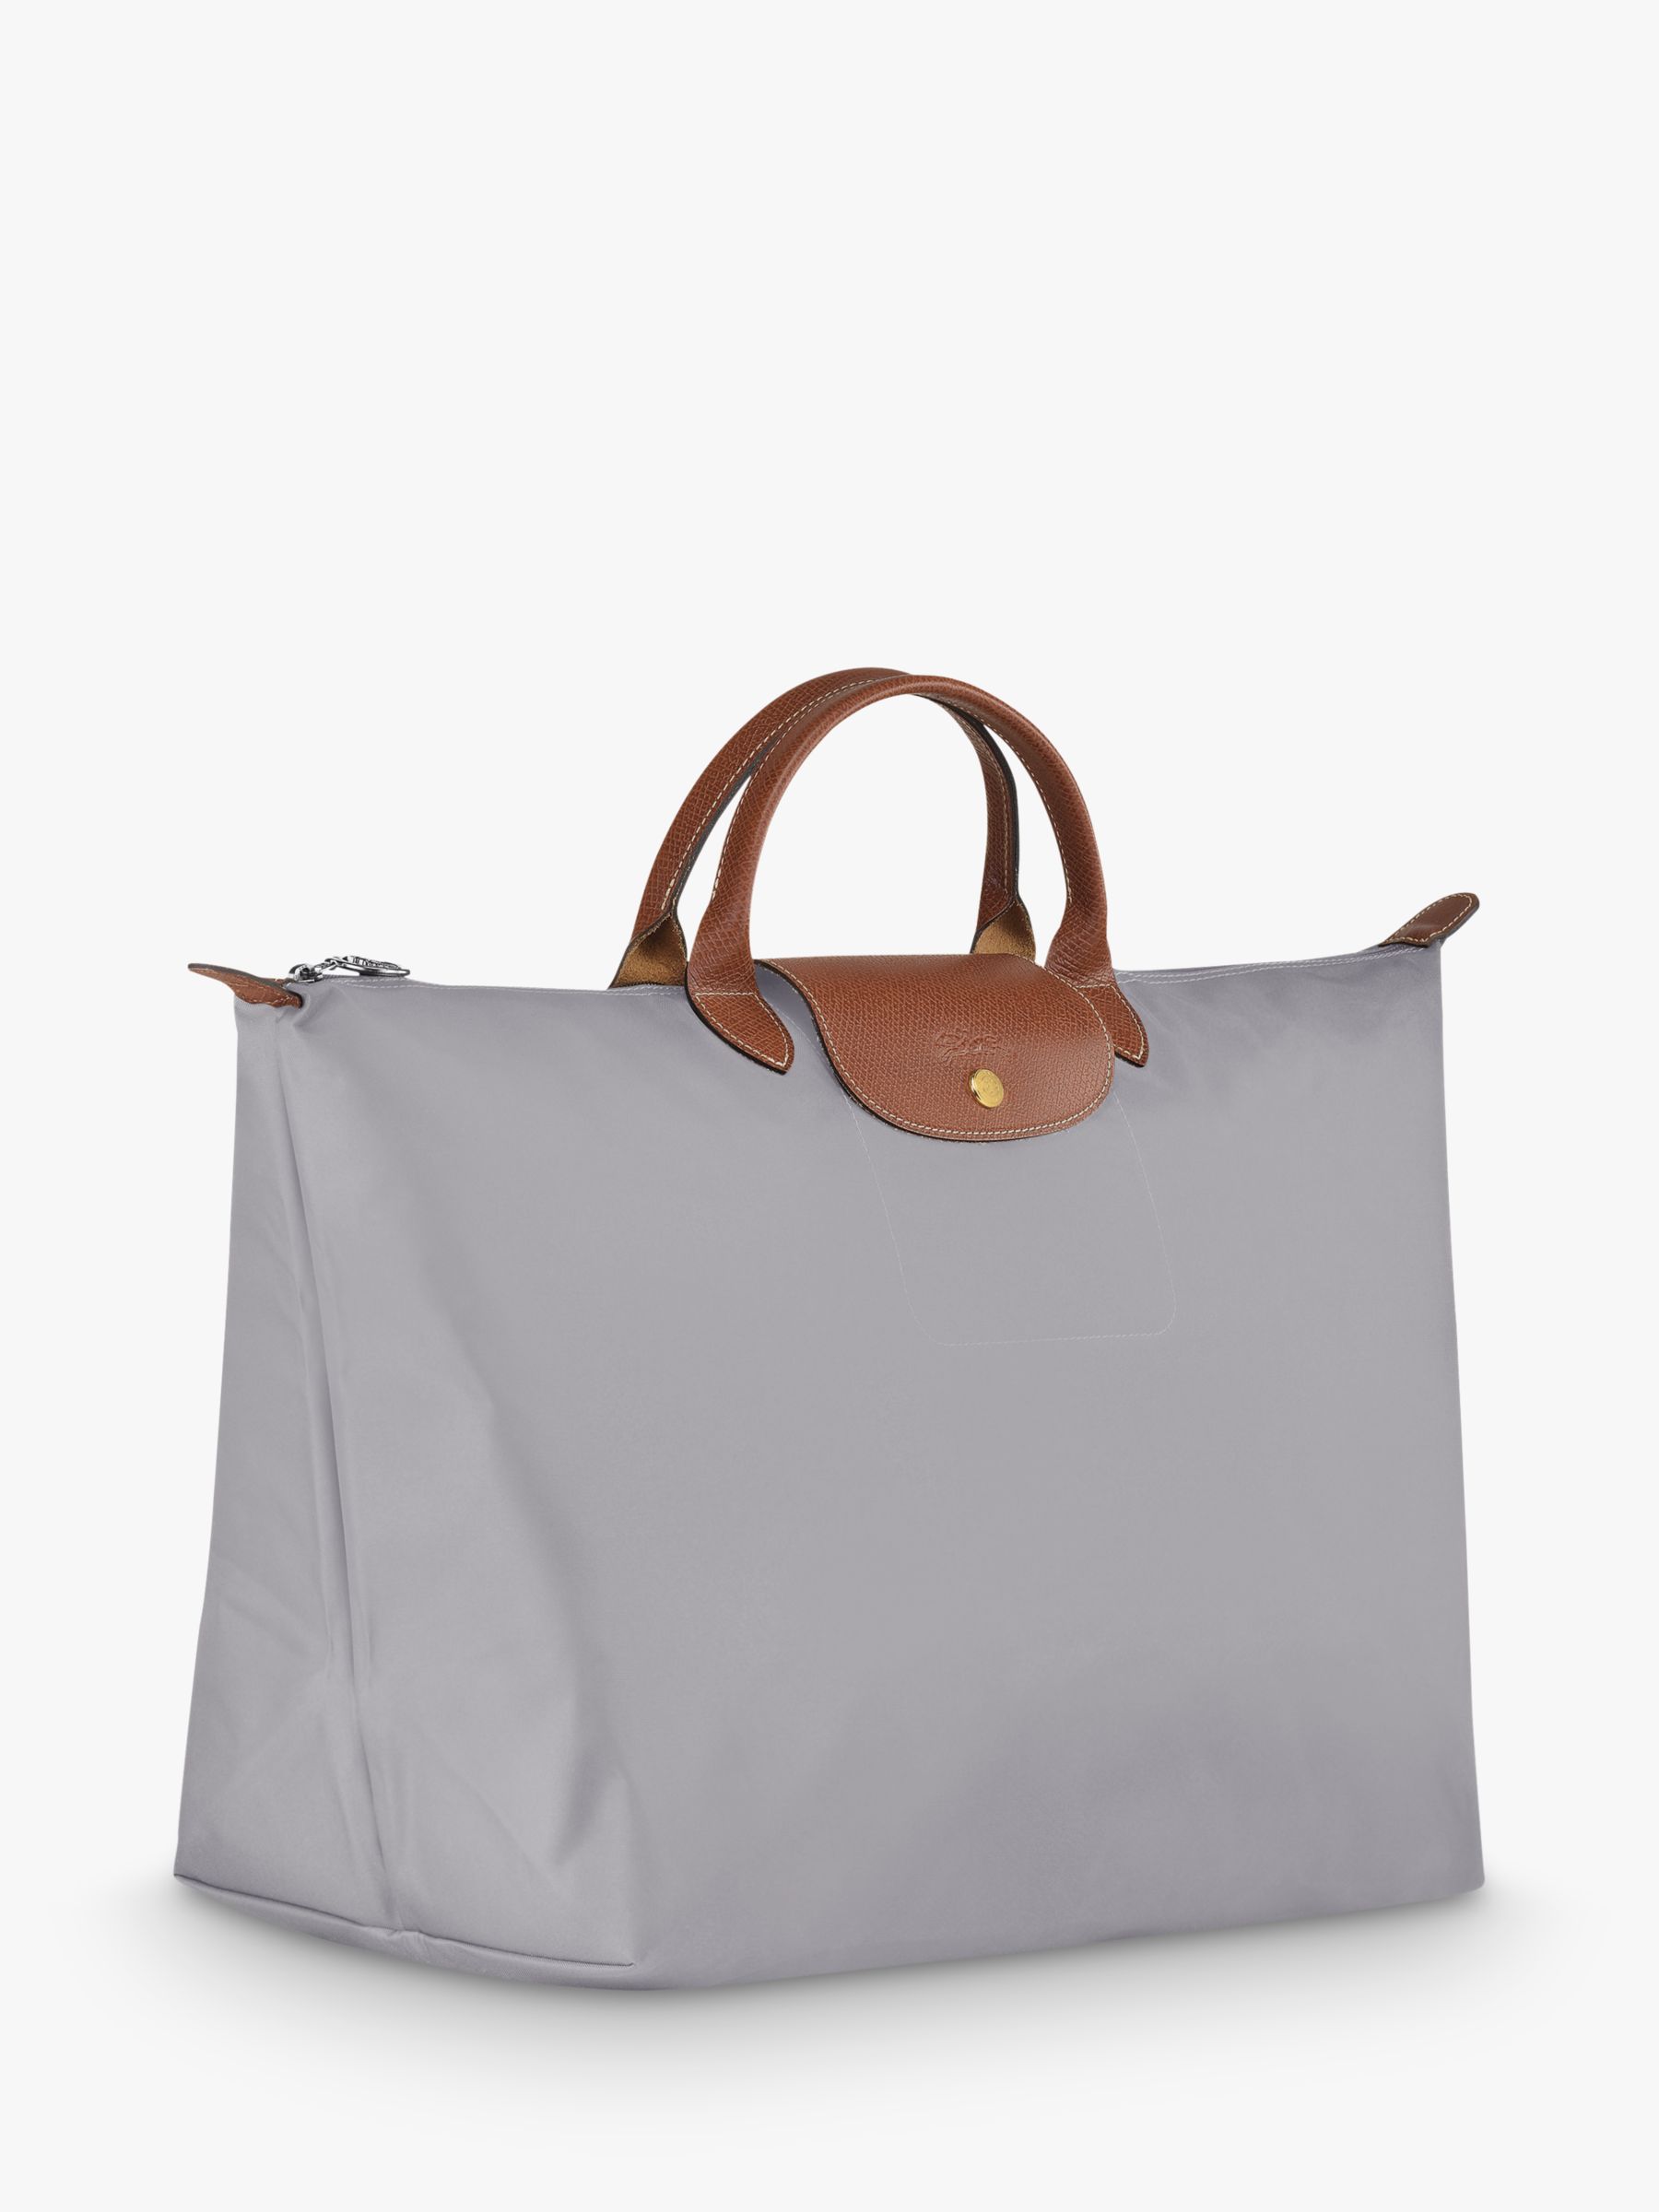 Longchamp Le Pliage Original Travel Bag, Grey at John Lewis & Partners